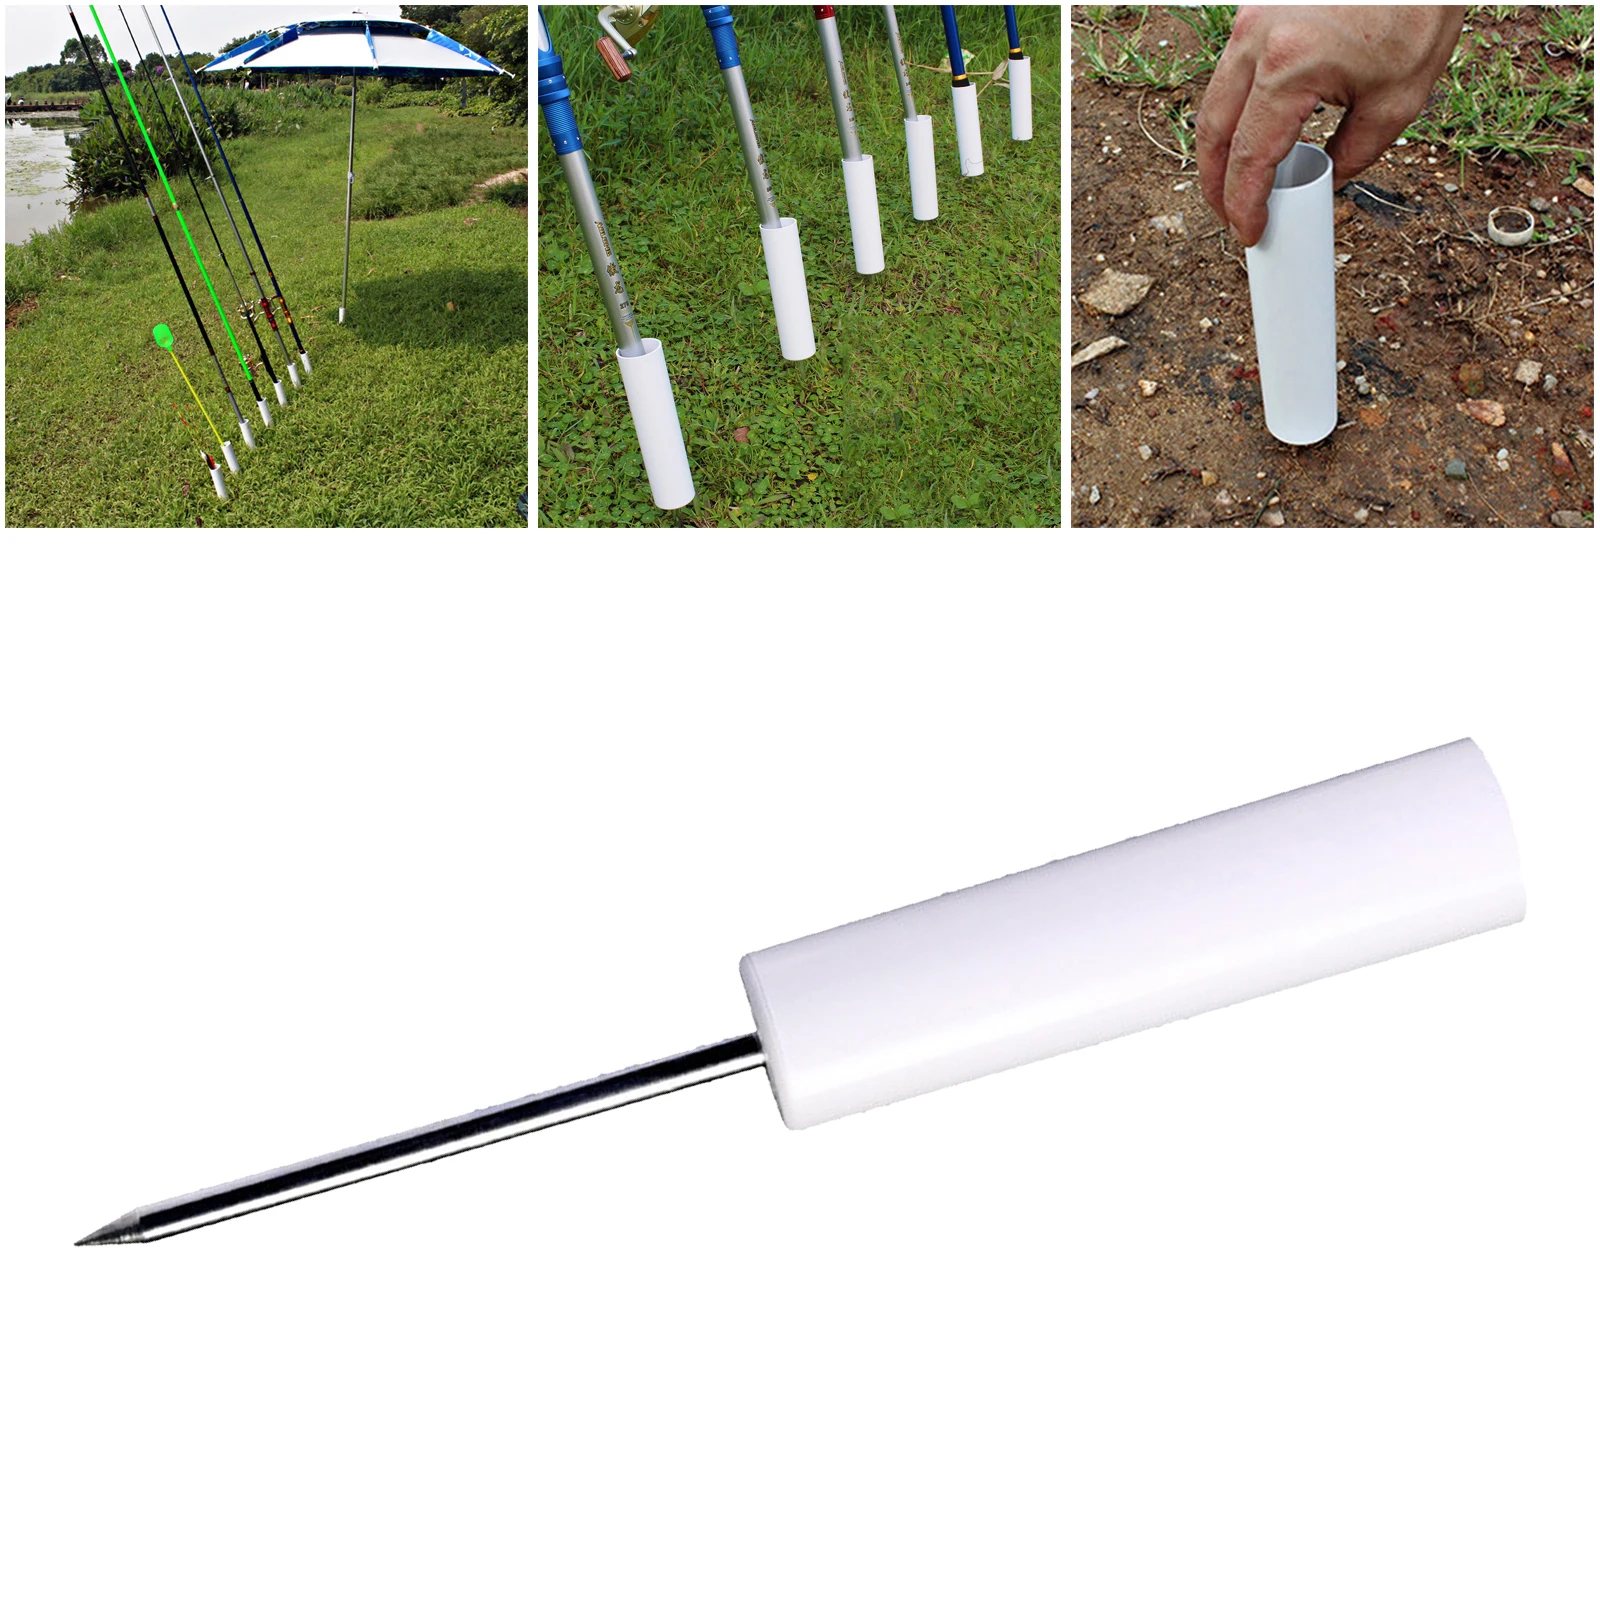 Fishing Rod Pole Holder Insert Ground PVC for Bank Fishing Fishing Supplies